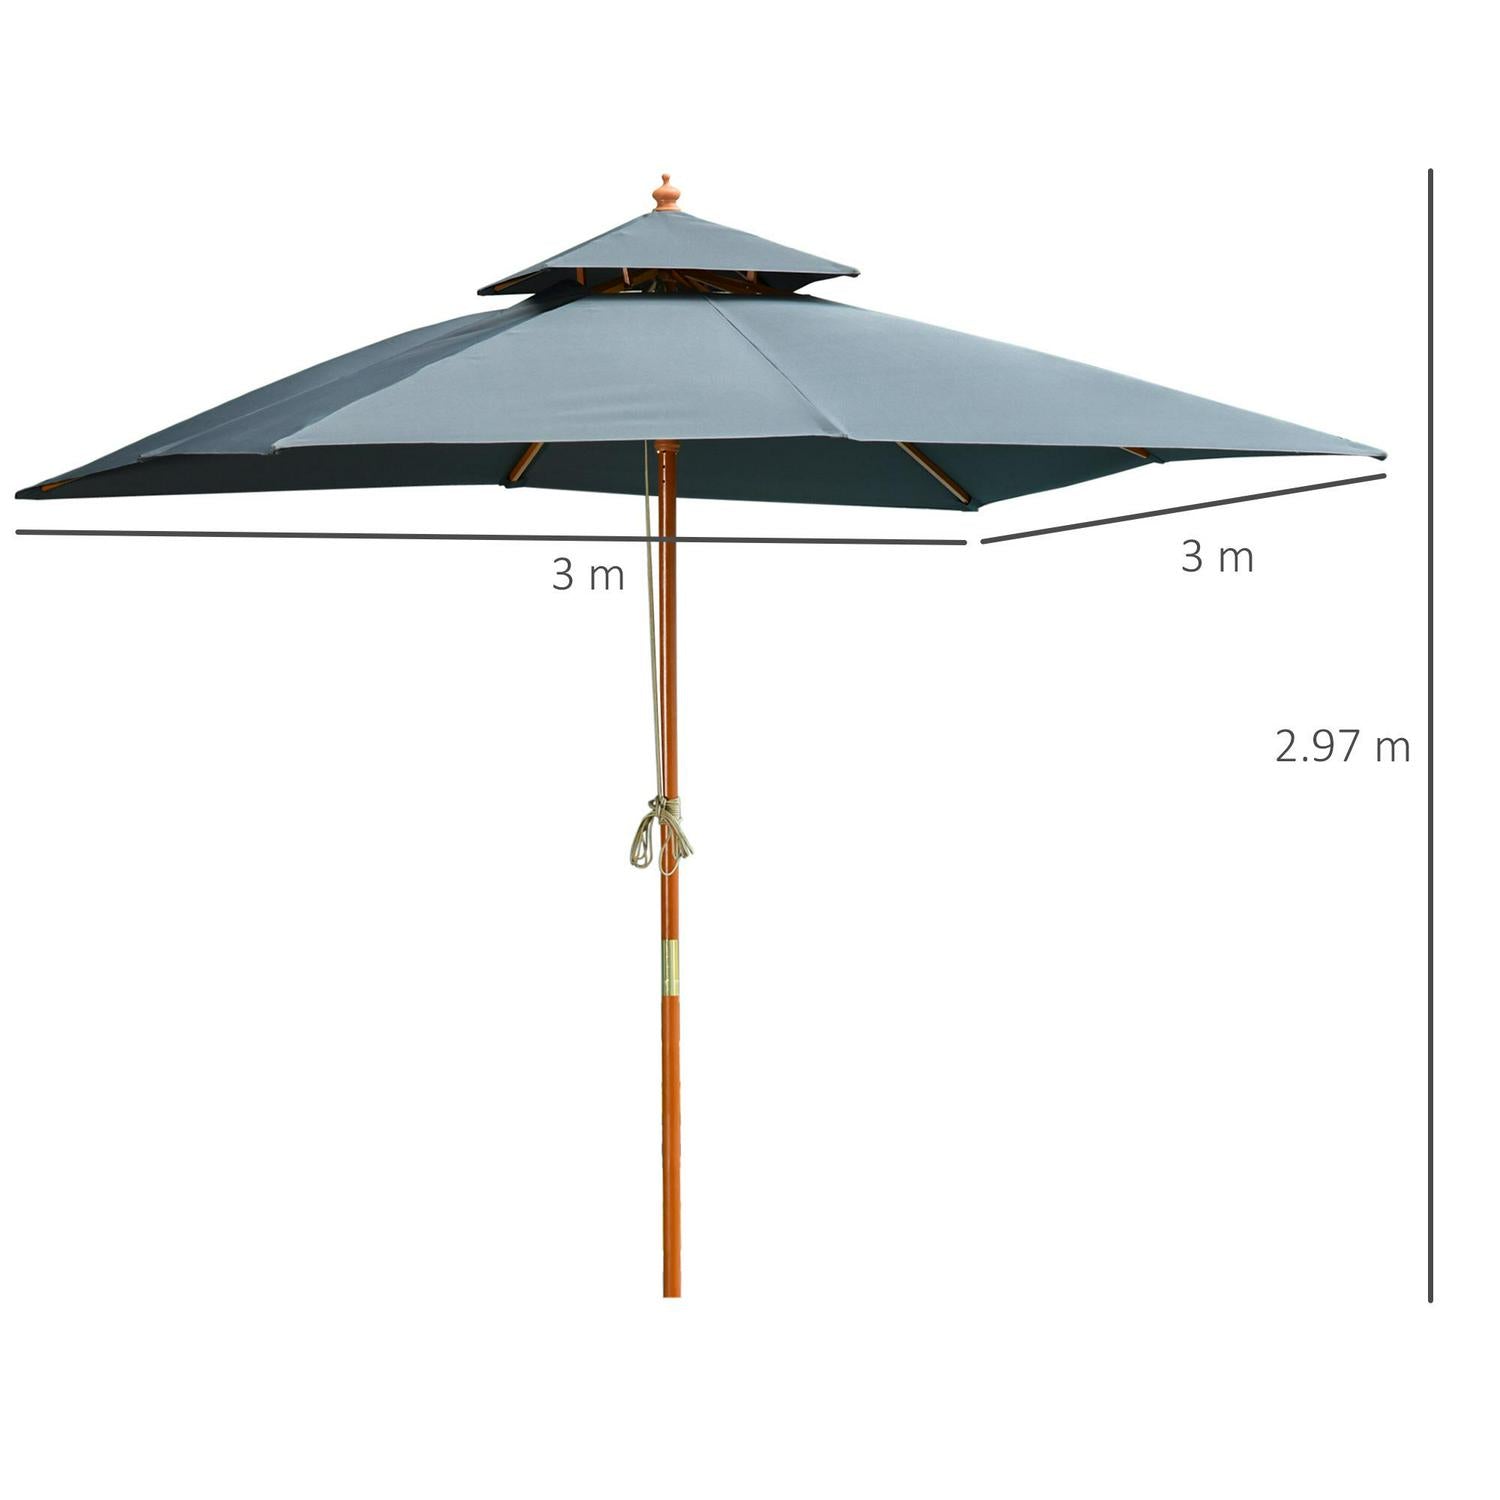 Wood Square Patio Umbrella Market Parasol Sunshade Canopy Dark Grey